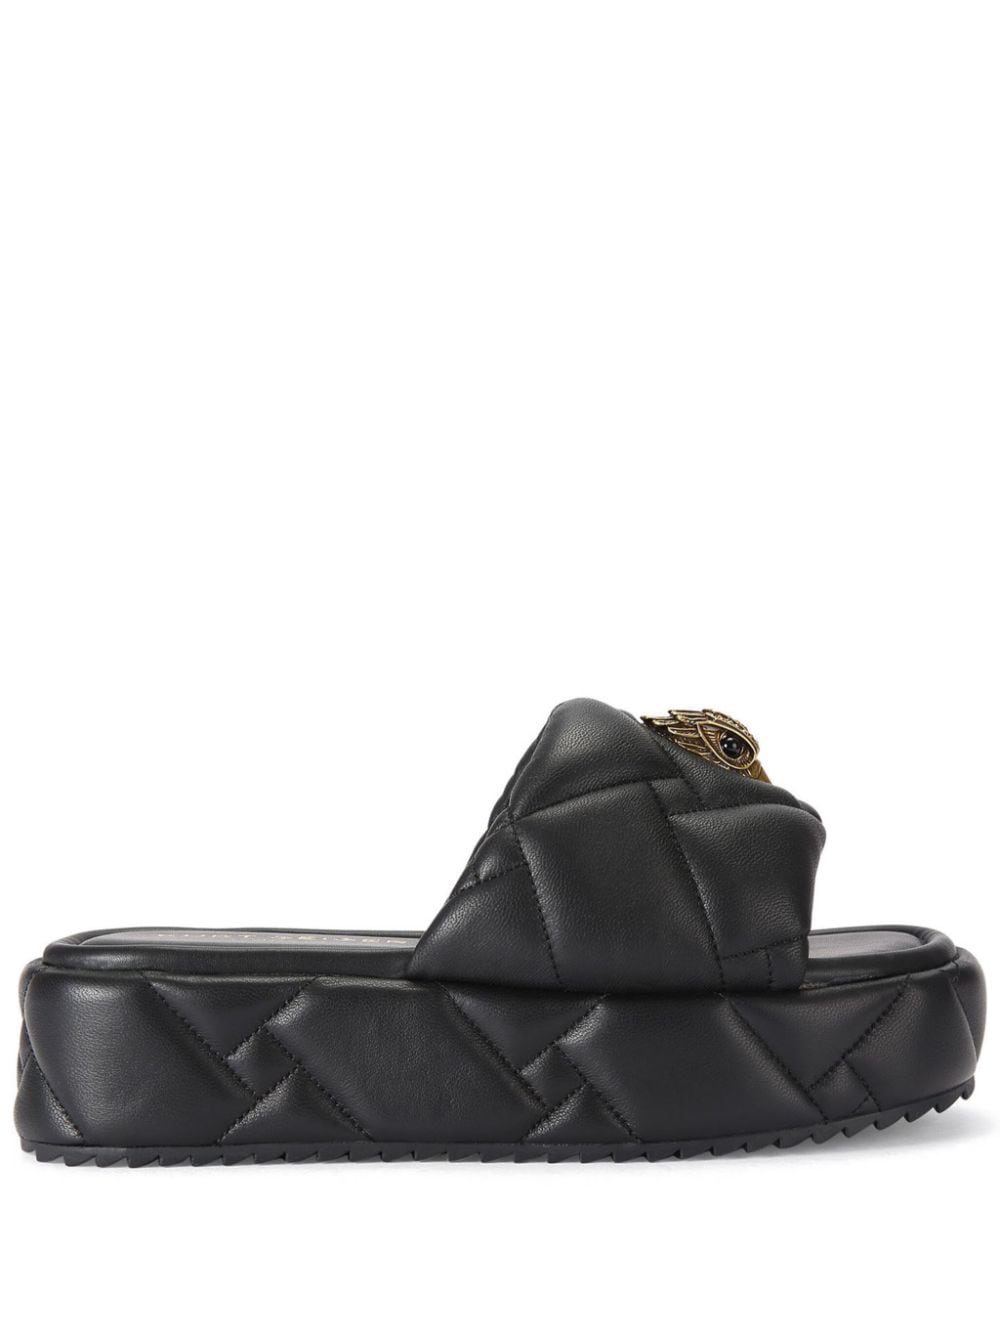 Kurt Geiger London Kensington Puff leather flatform sandals - Black von Kurt Geiger London